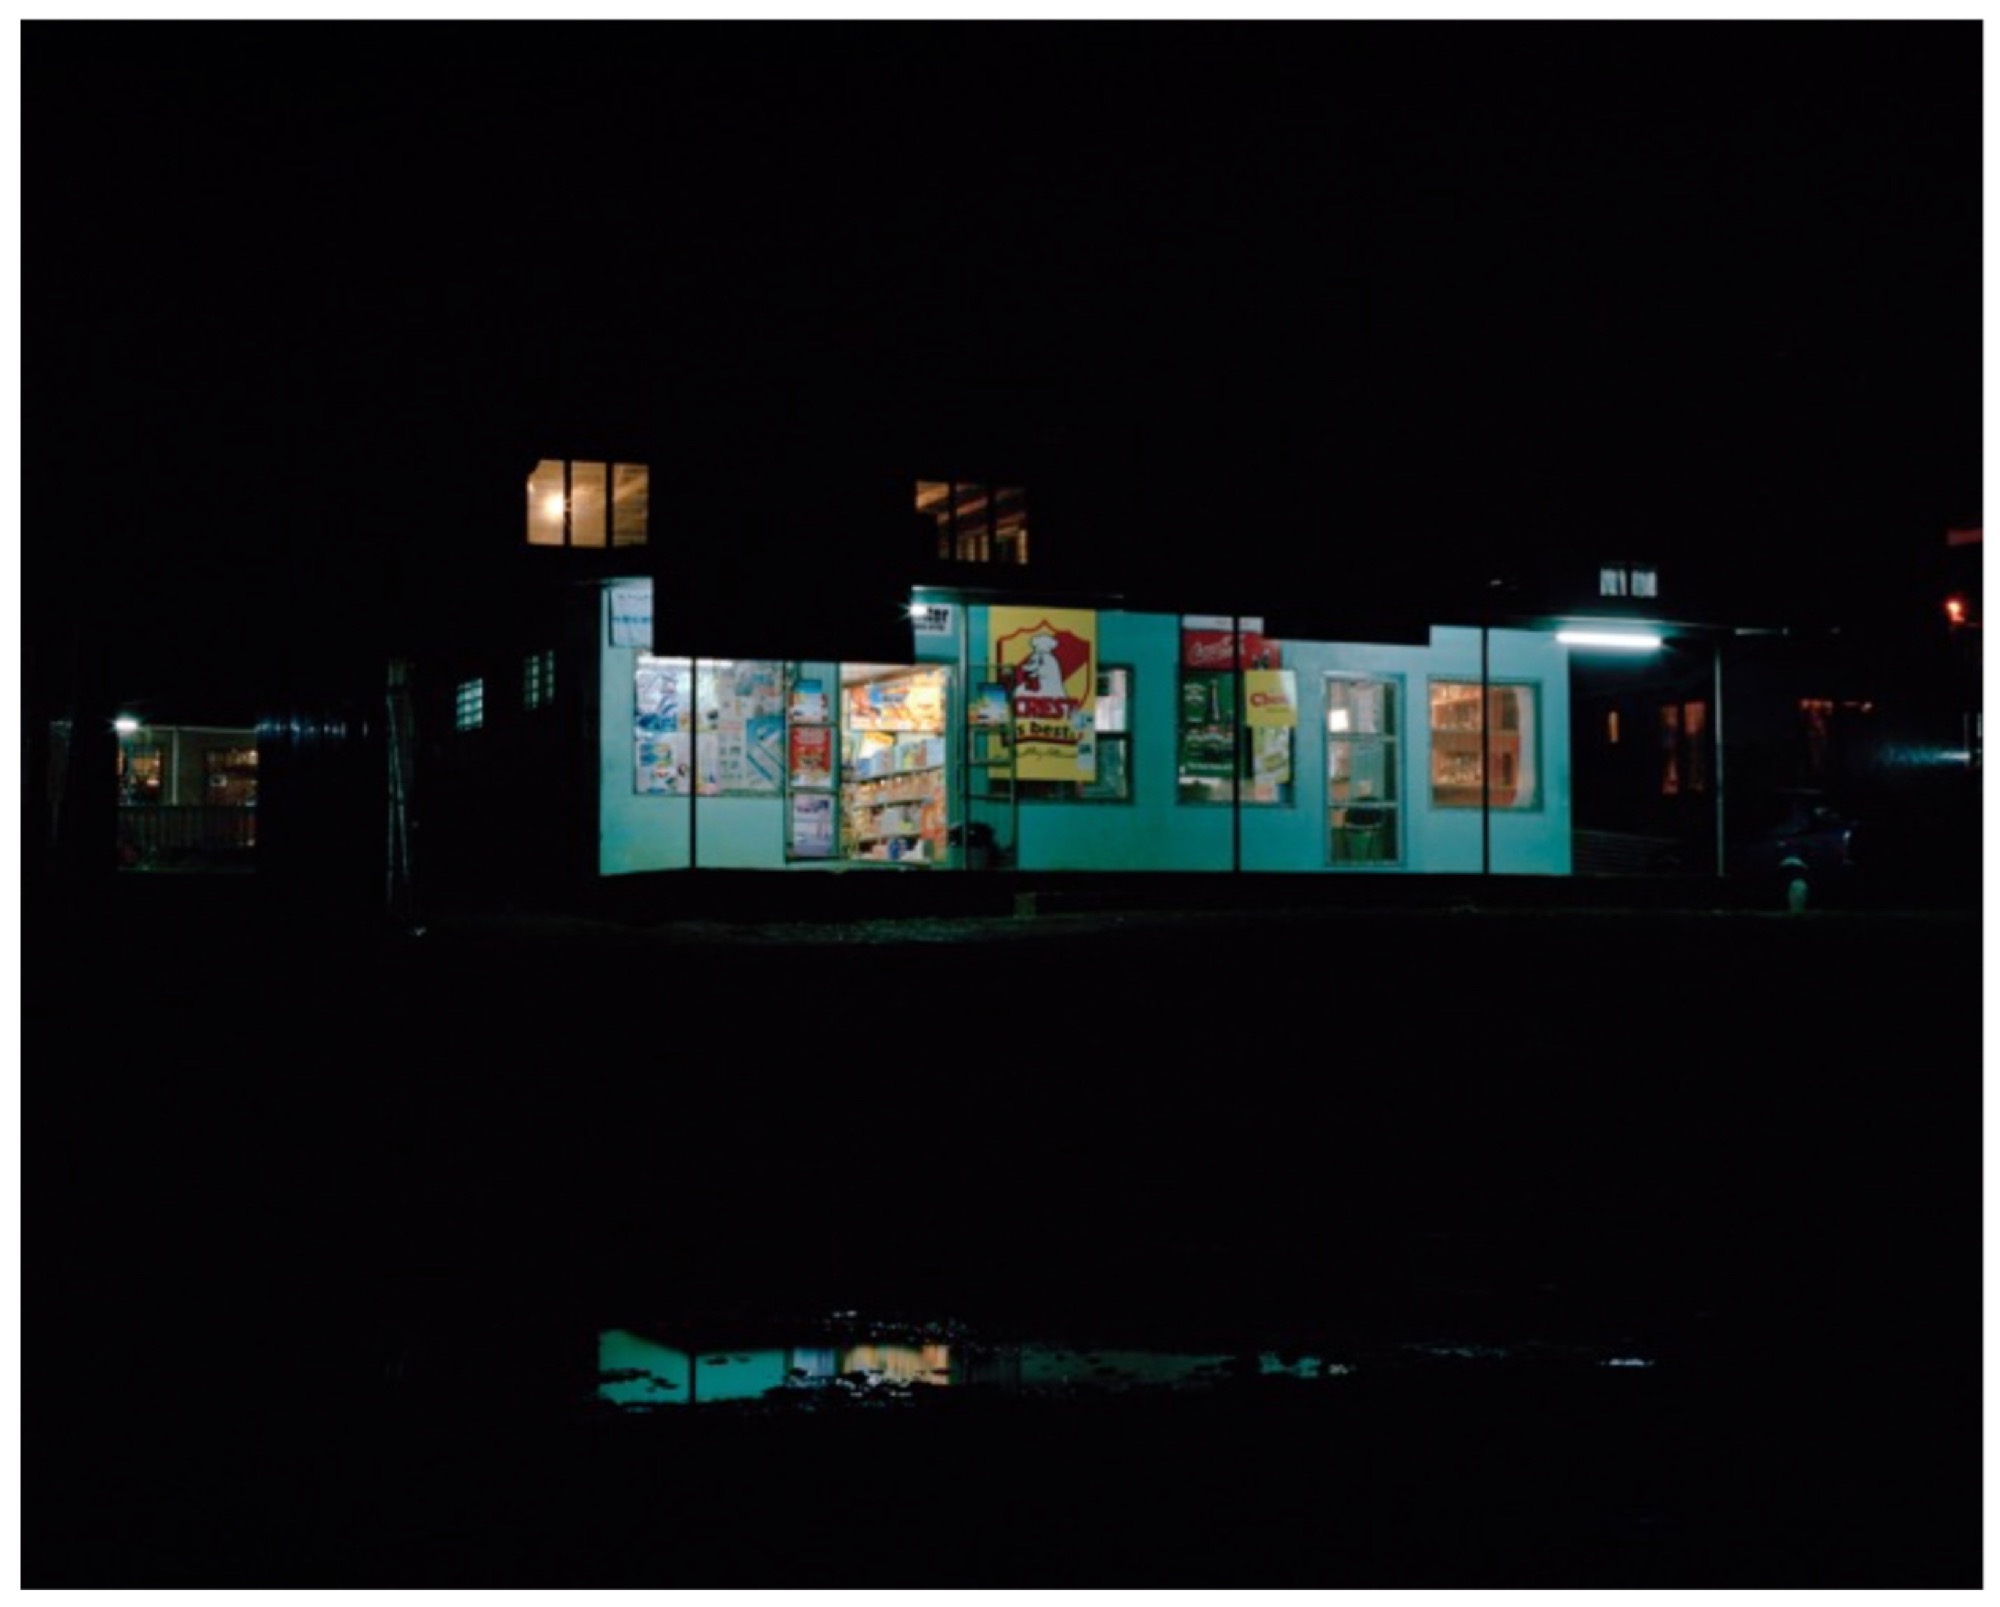 Douglas Lance Gibson, <em>Sitoa Na Dola Ni Bogi (Store Open At Night)</em>, 2014.<br />
Archival pigment print, coconut timber frame, 40 x 50 cm.